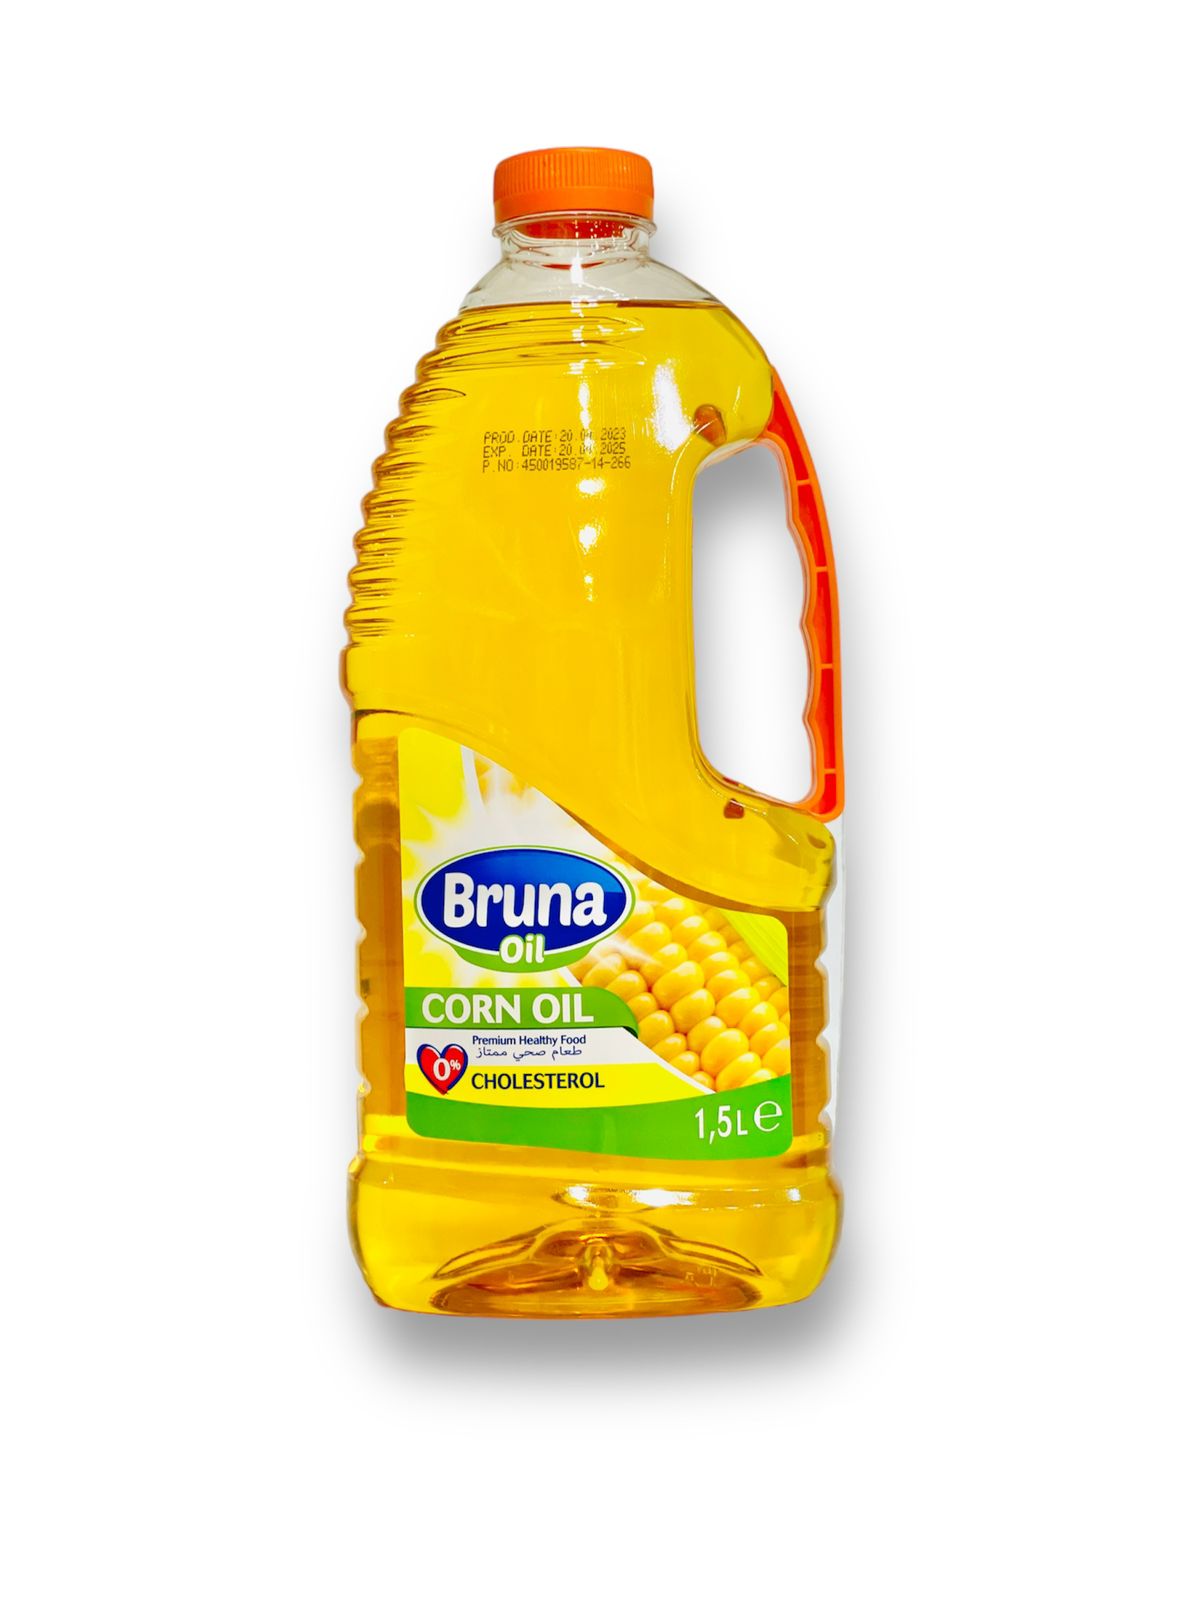 Bruna Oil, Corn Oil, 1.5Litre, Ingredients 100% Made in Turkey, زيت الذرة من ماركة برونا التركية زيت الذرة الطبيعي 100 بالمية ومفلتر 5 مرات